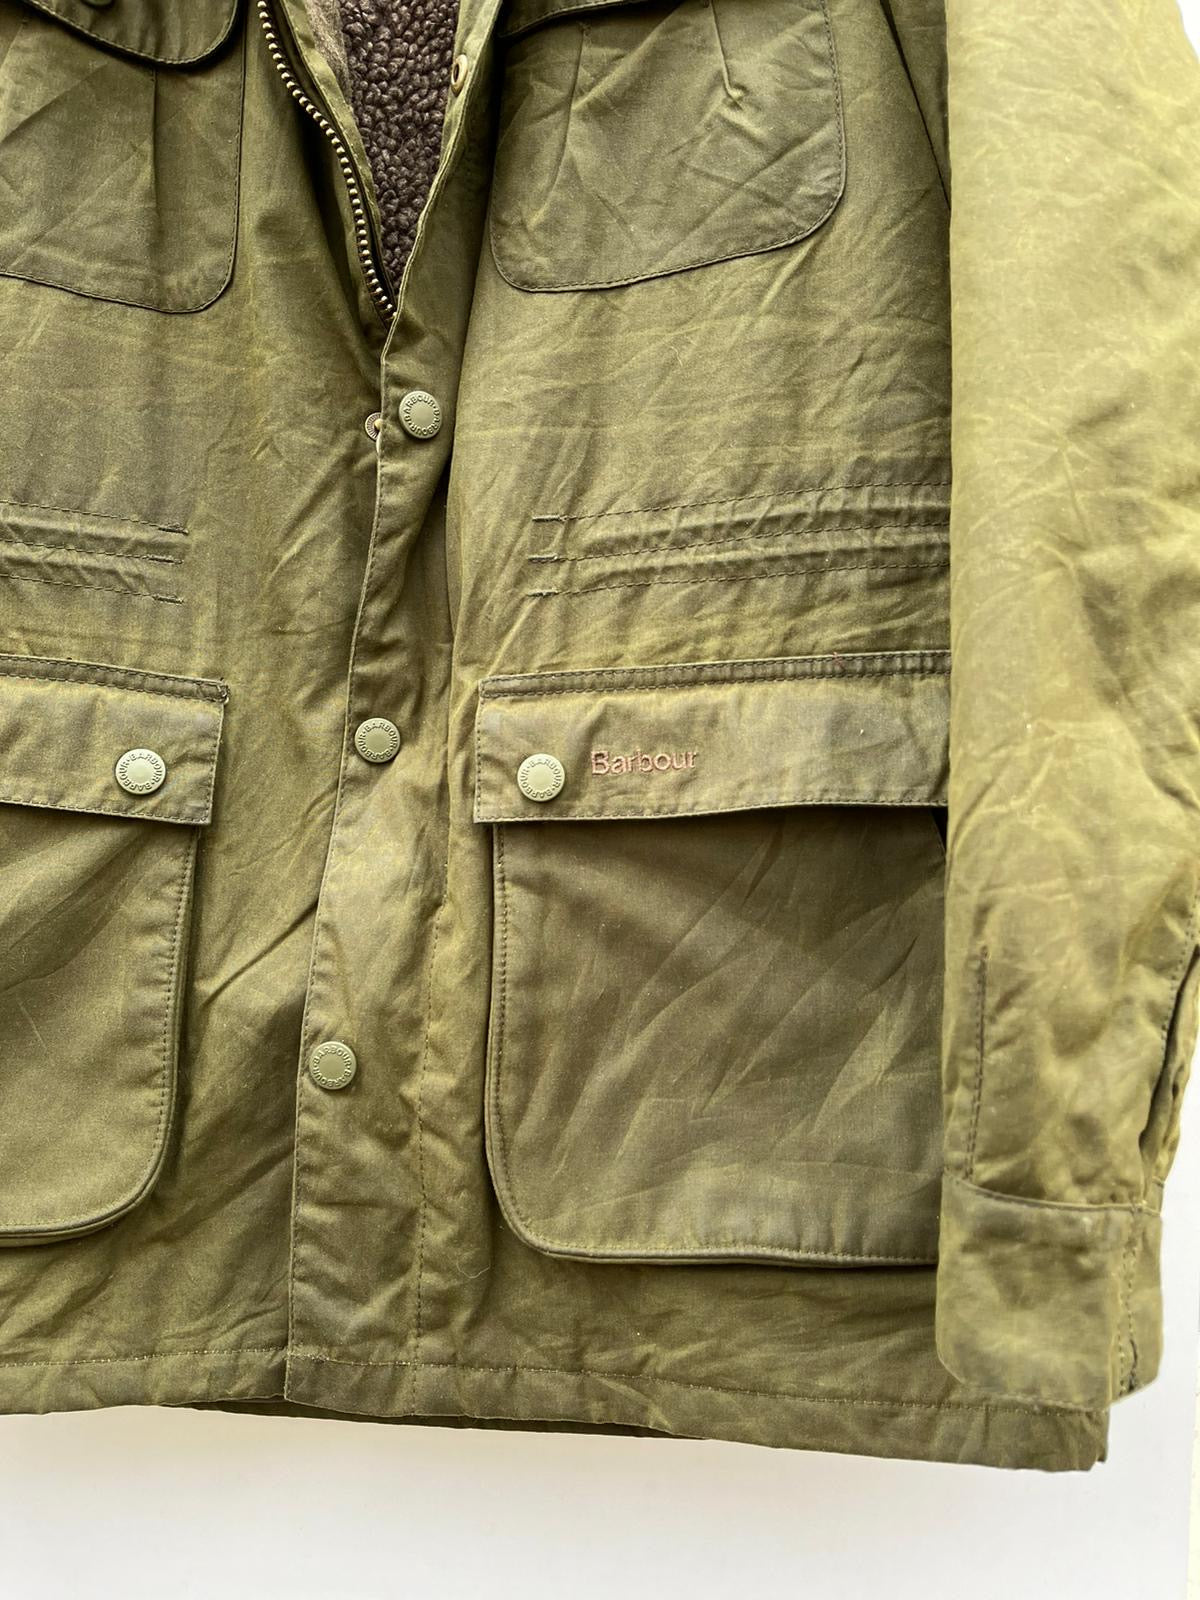 Barbour Giacca verde Uomo Brindle wax jacket Medium Green wax Jacket Size M